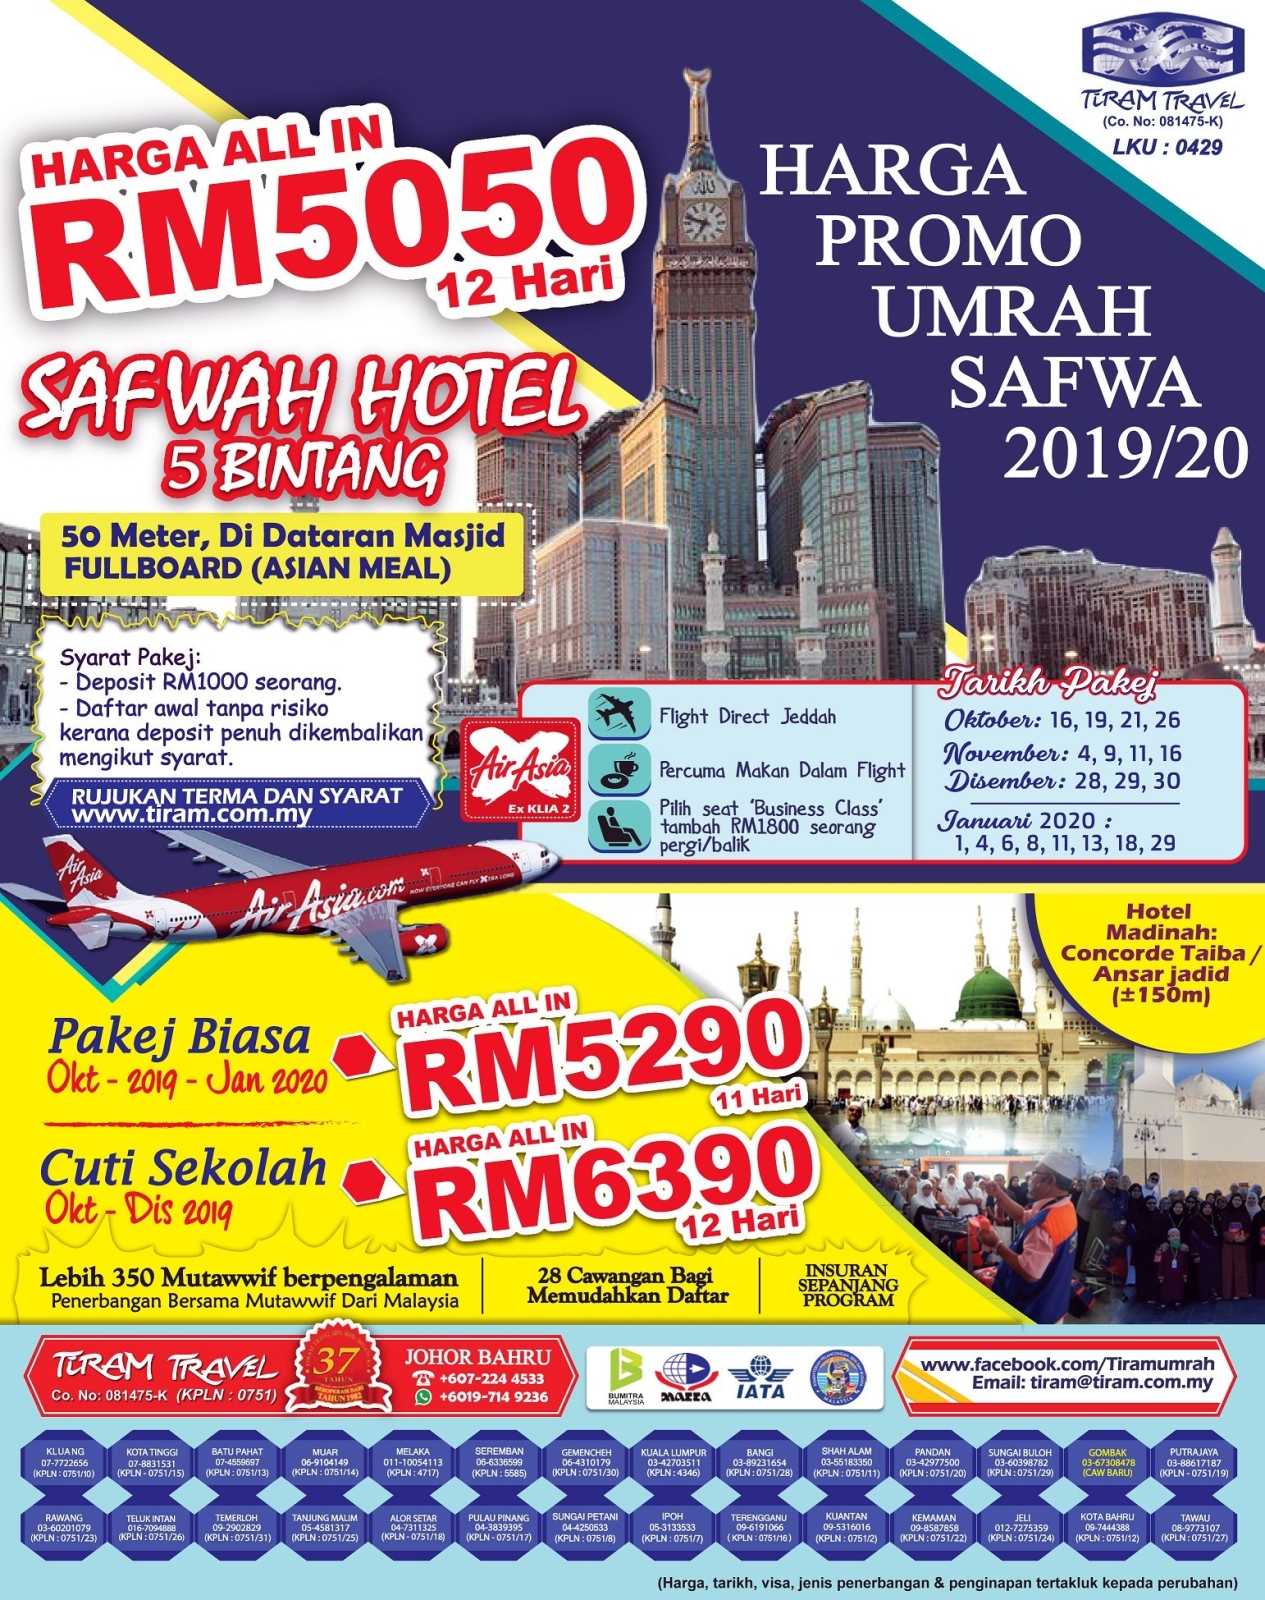 Latest News - PROMOSI PROMOSI PROMOSI | Tiram Travel Sdn Bhd